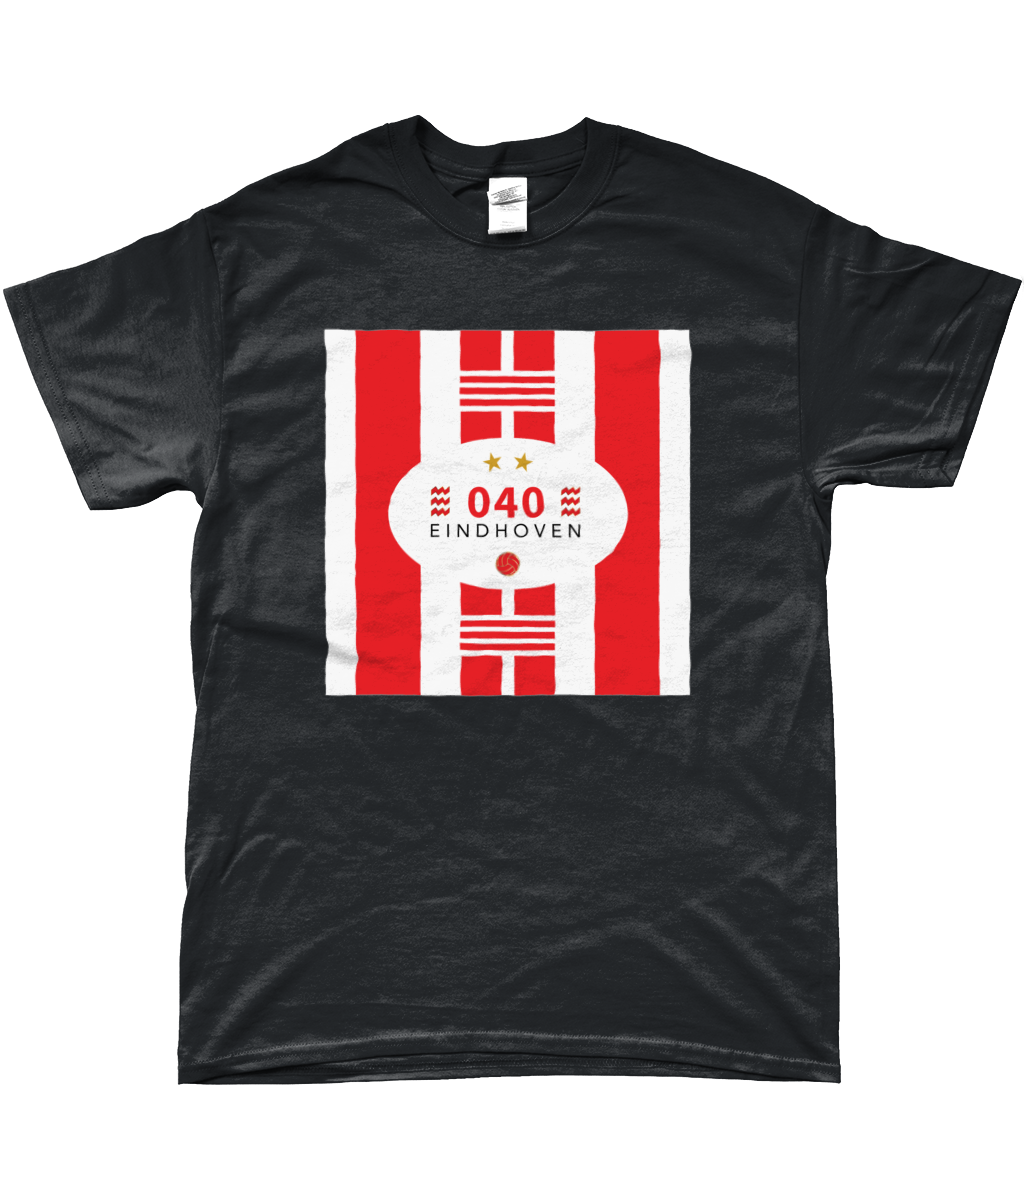 PSV - 040 Eindhoven T-shirt